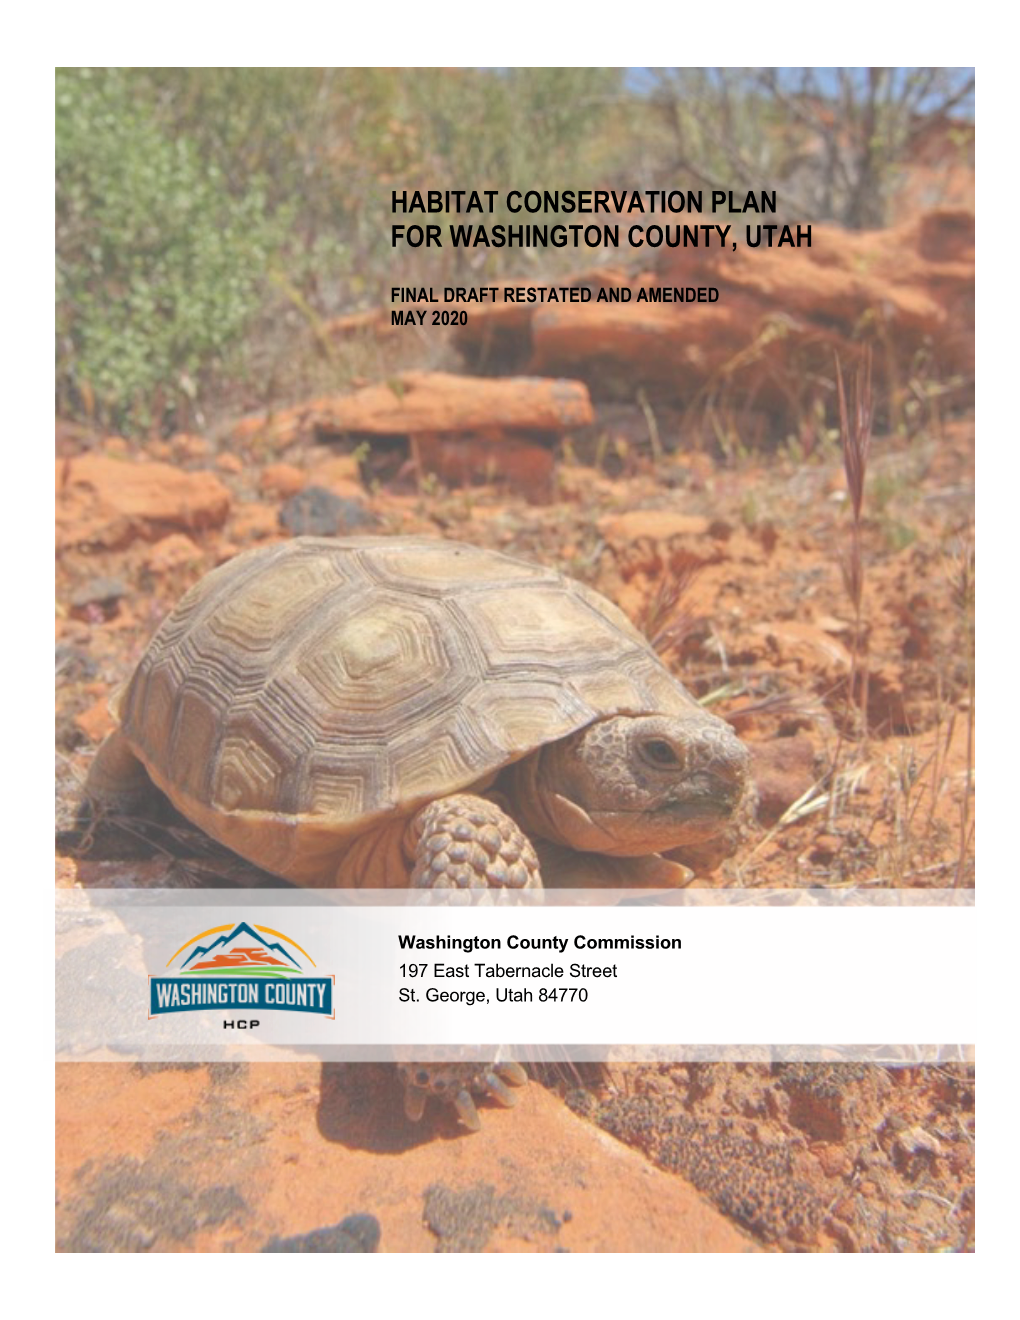 Habitat Conservation Plan for Washington County, Utah